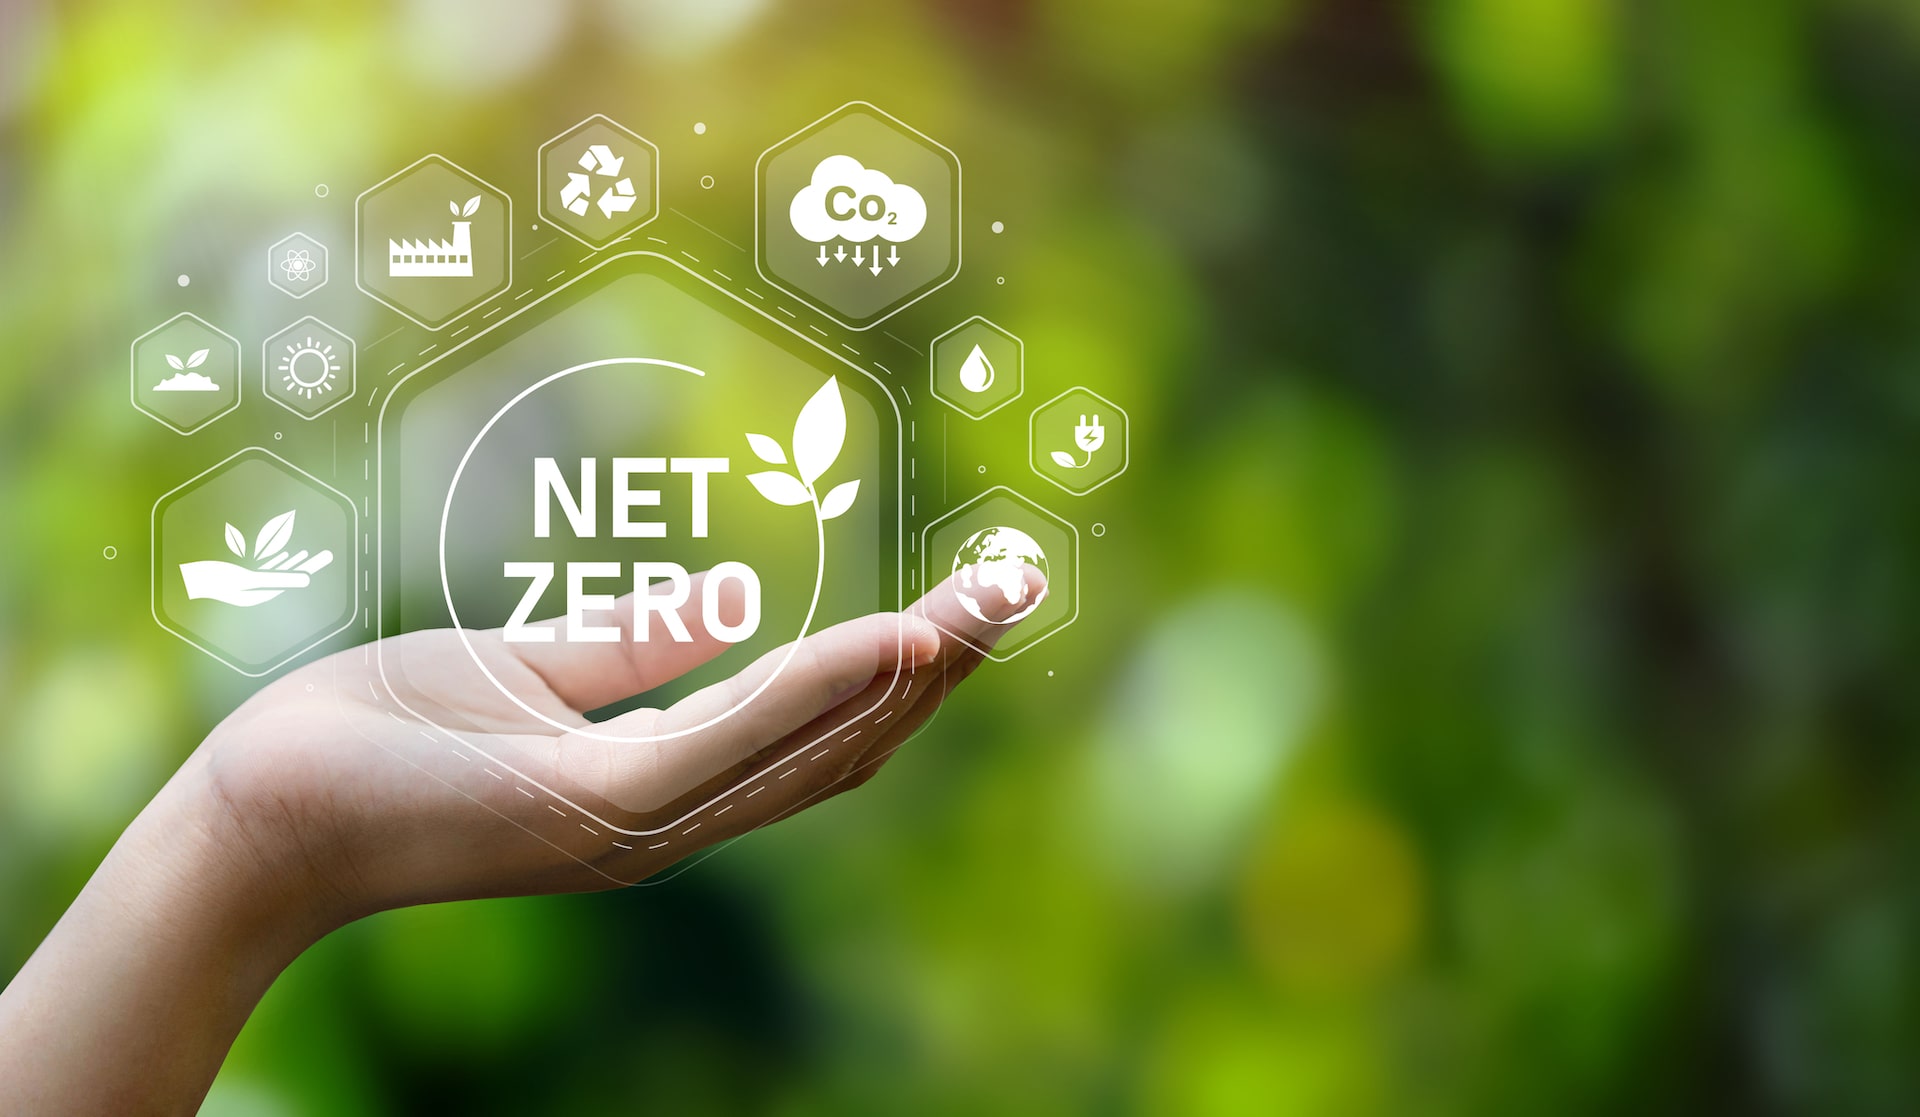 What is Net Zero?